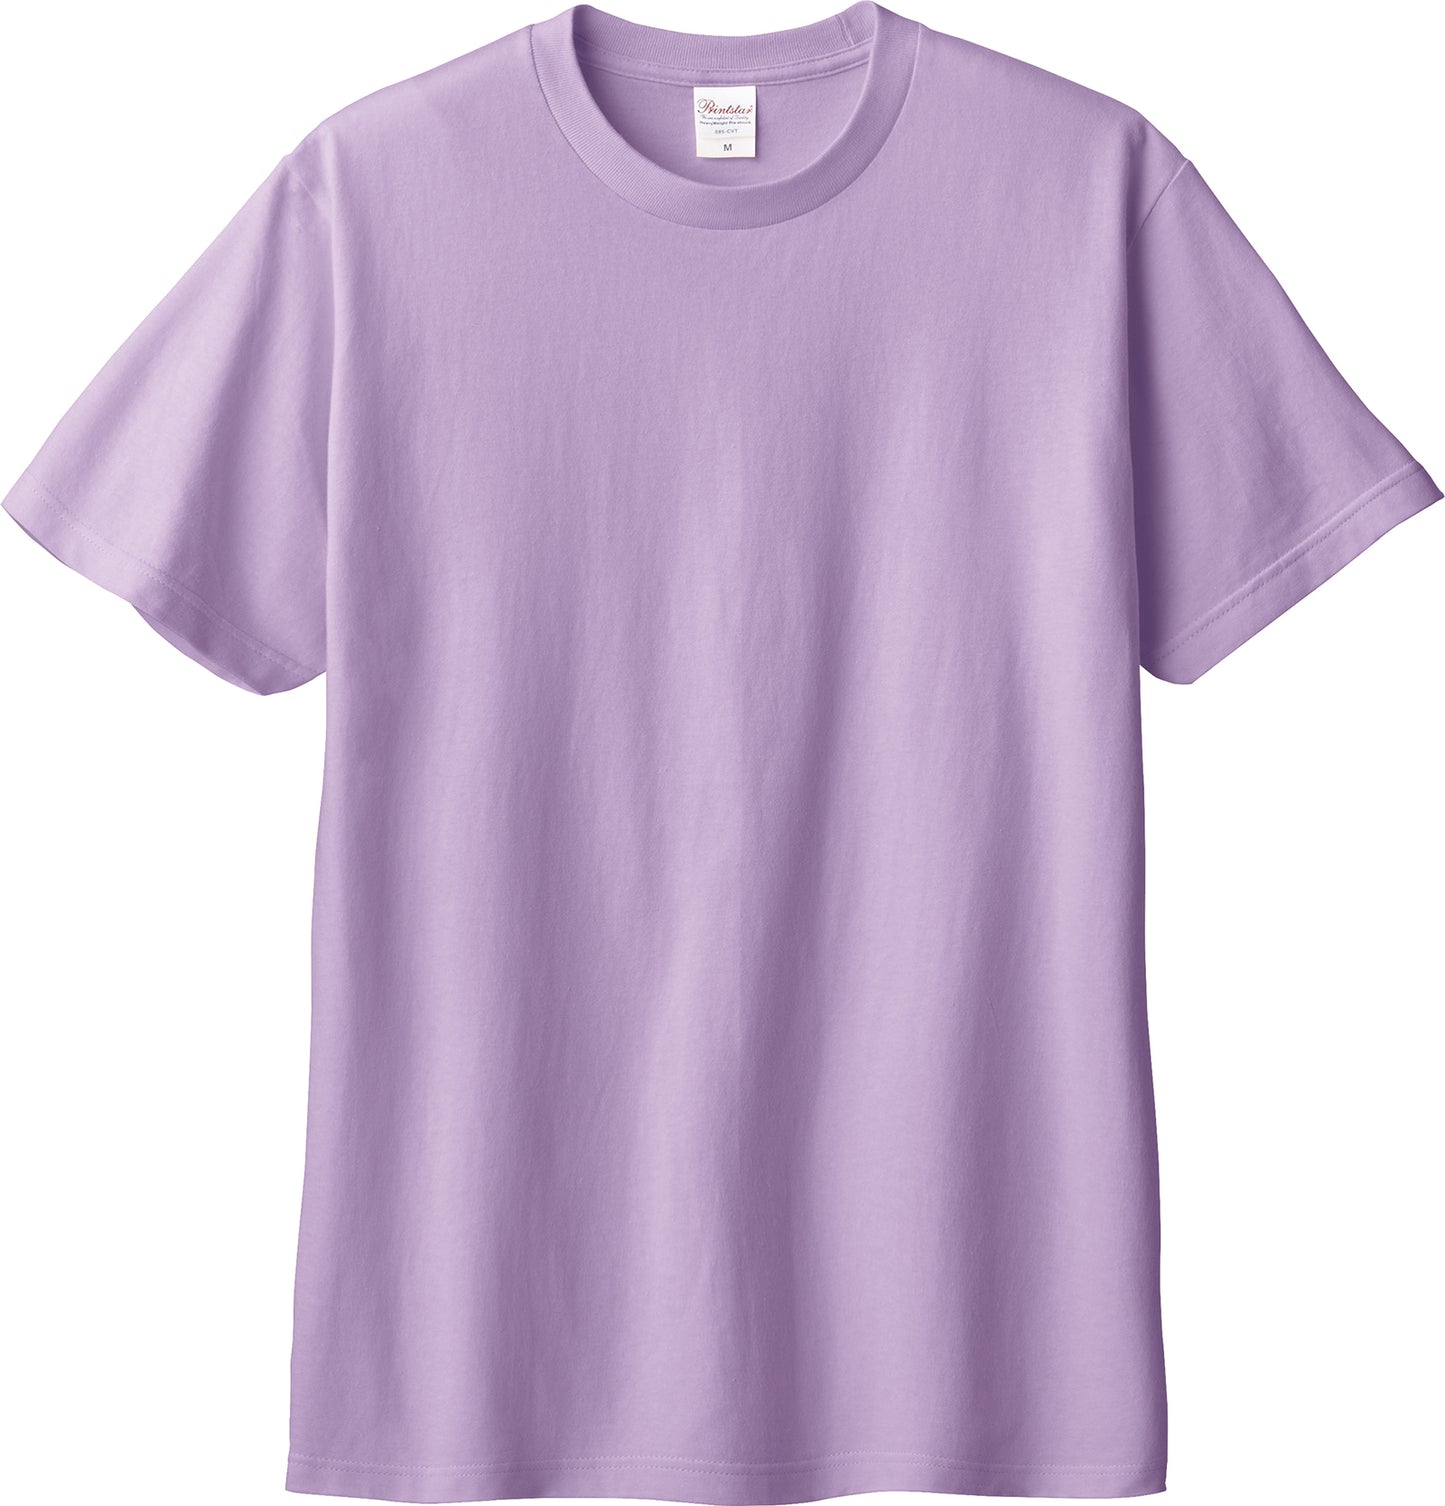 Printstar [*00085-CVT] 5.6oz Heavy Weight T-shirts